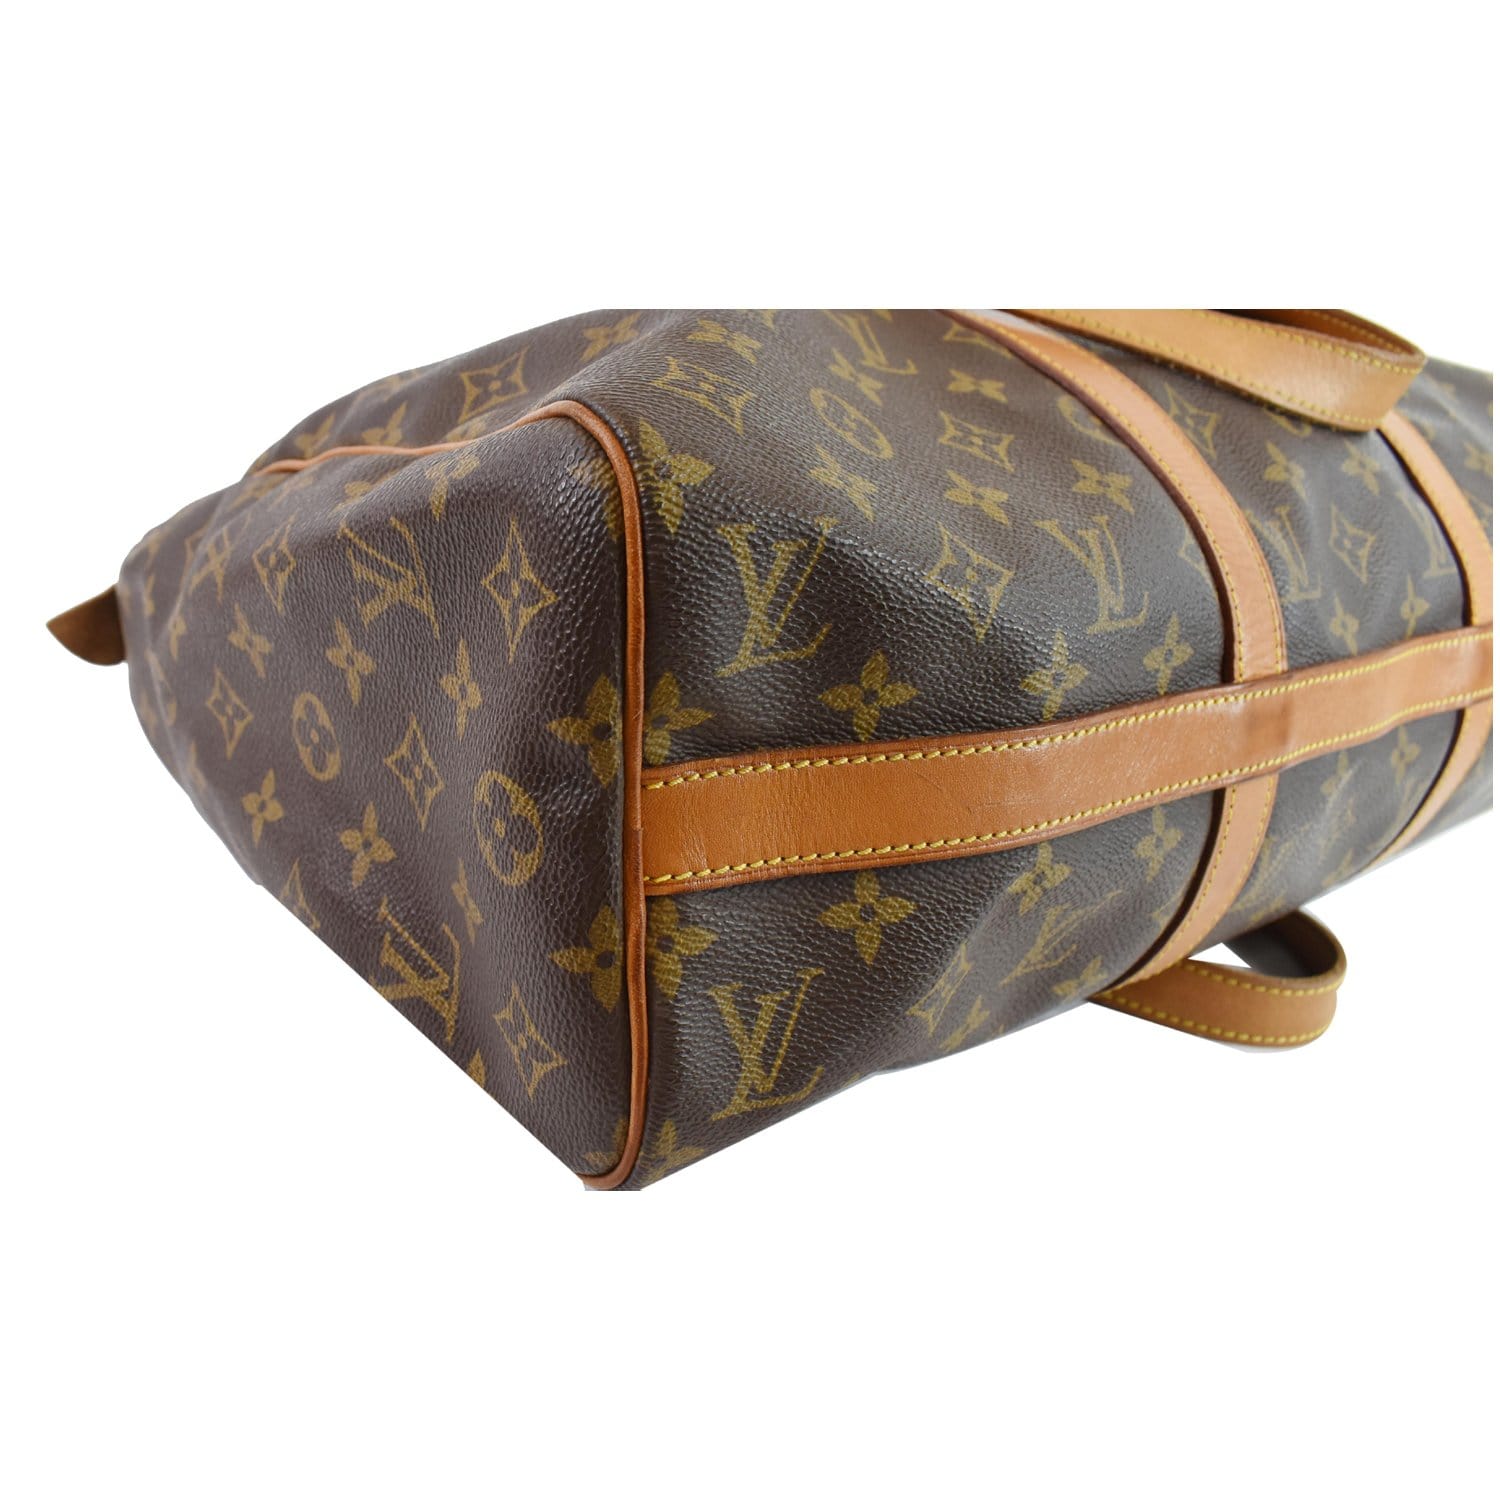 Louis Vuitton Monogram Canvas Sac Shopping Large Tote Bag with